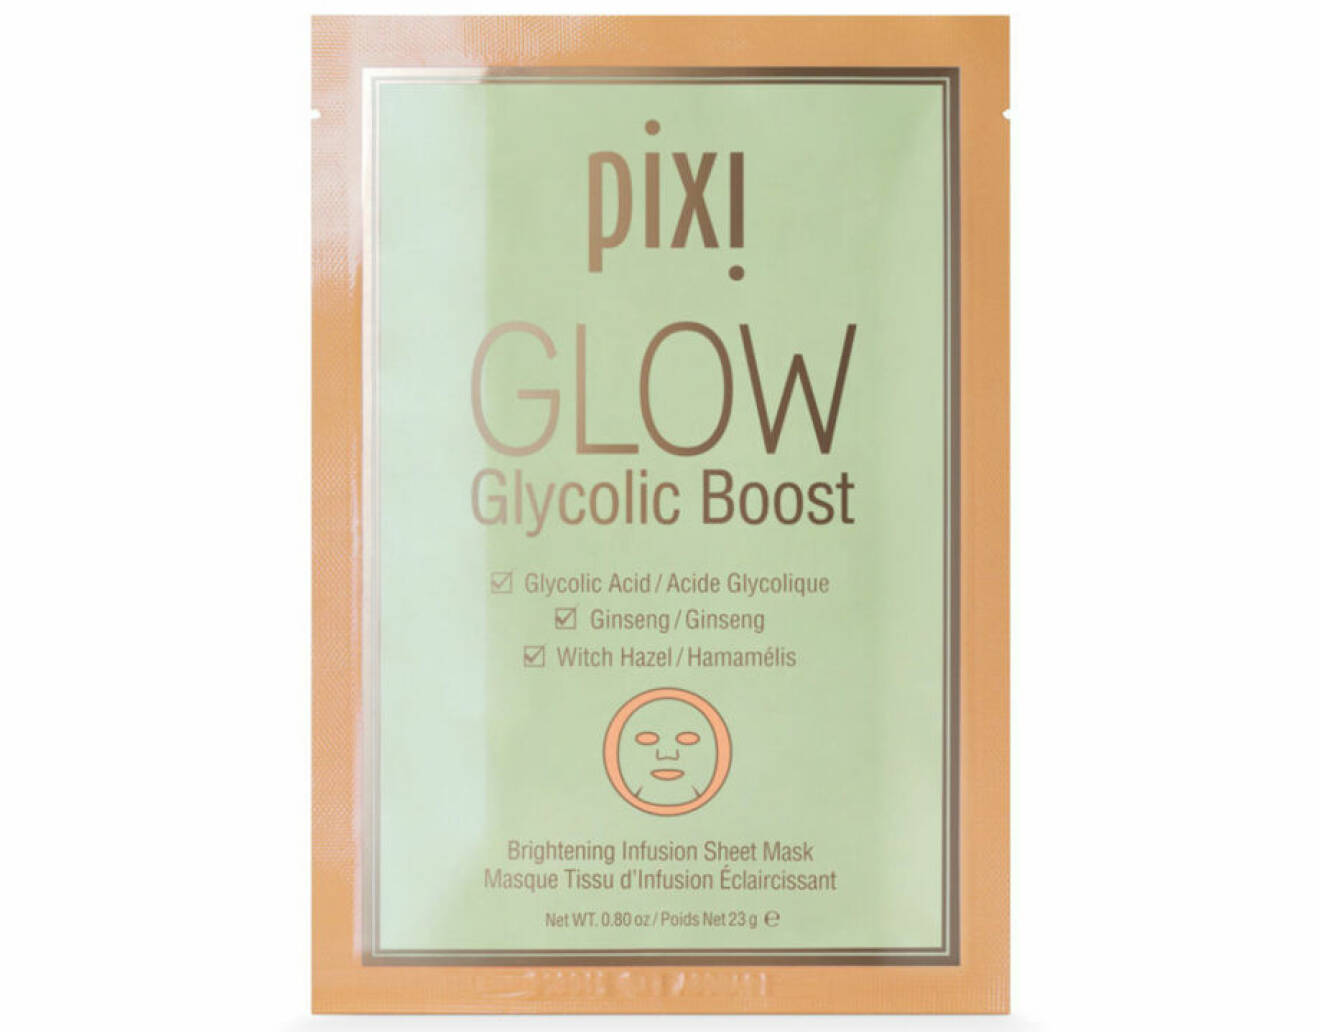 pixi glow glycolic boost recension omdöme betyg